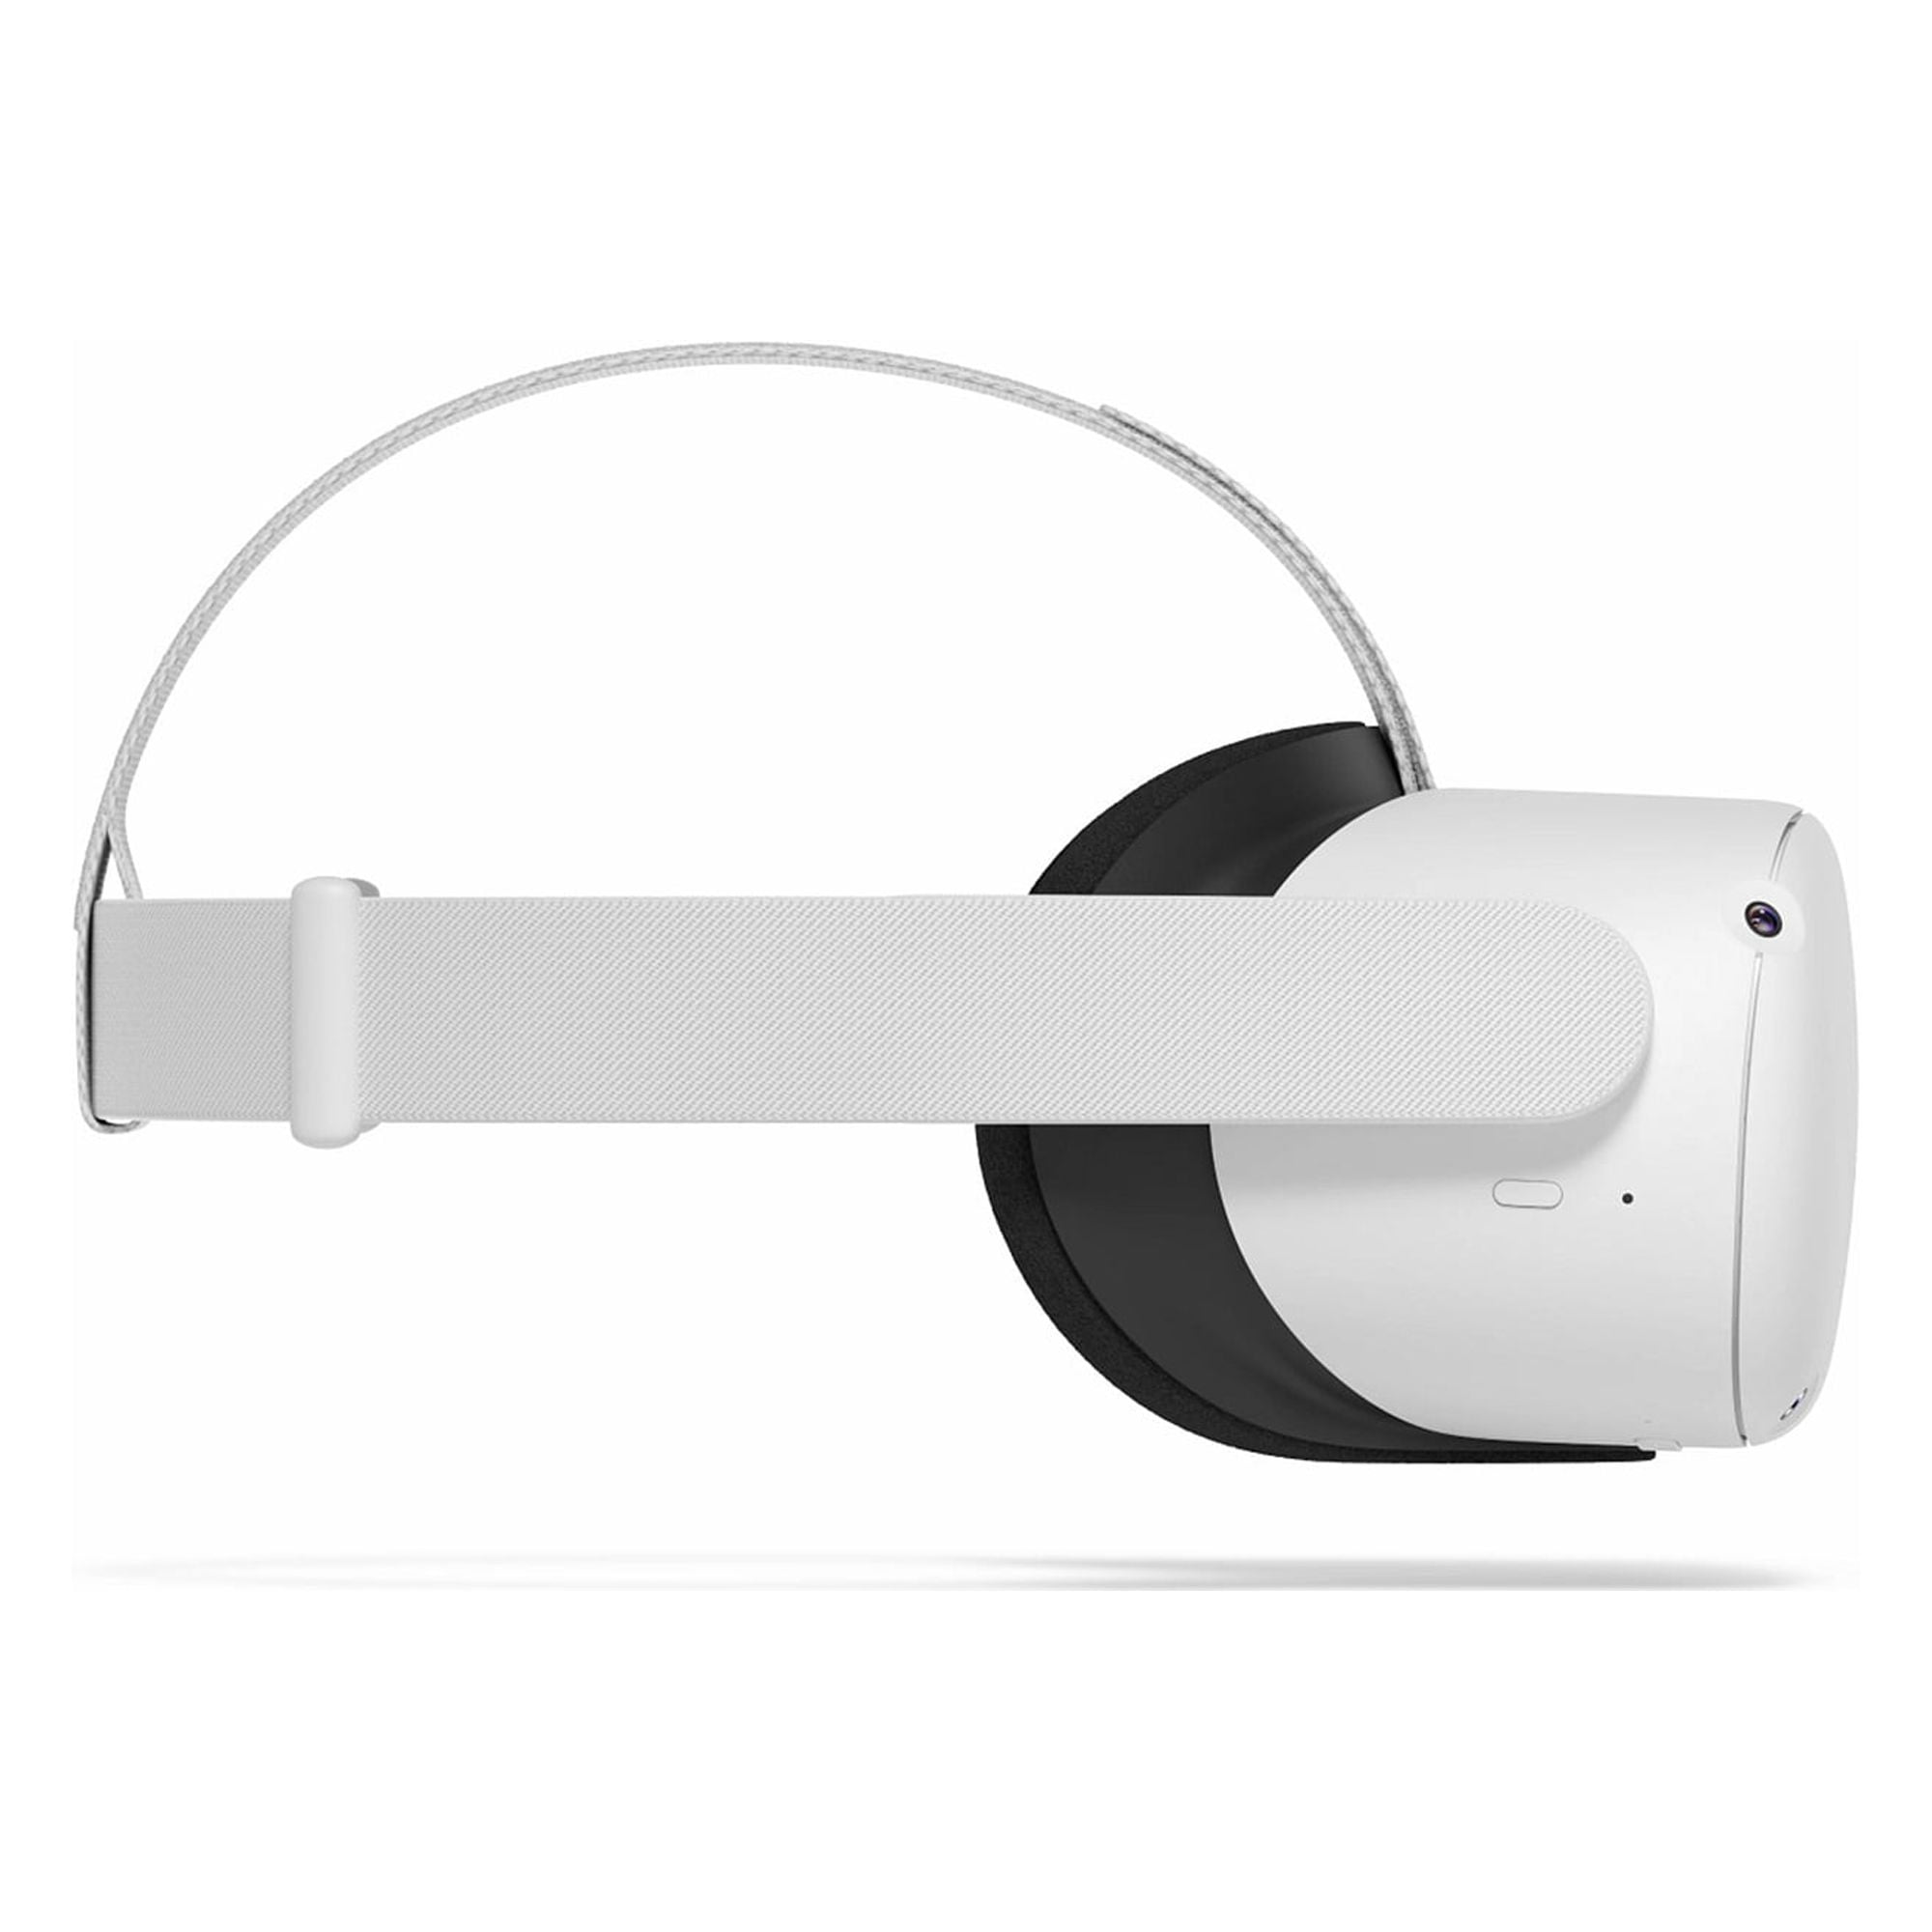 Meta Quest 2 — All in One Wireless VR Headset — GB   Walmart.com